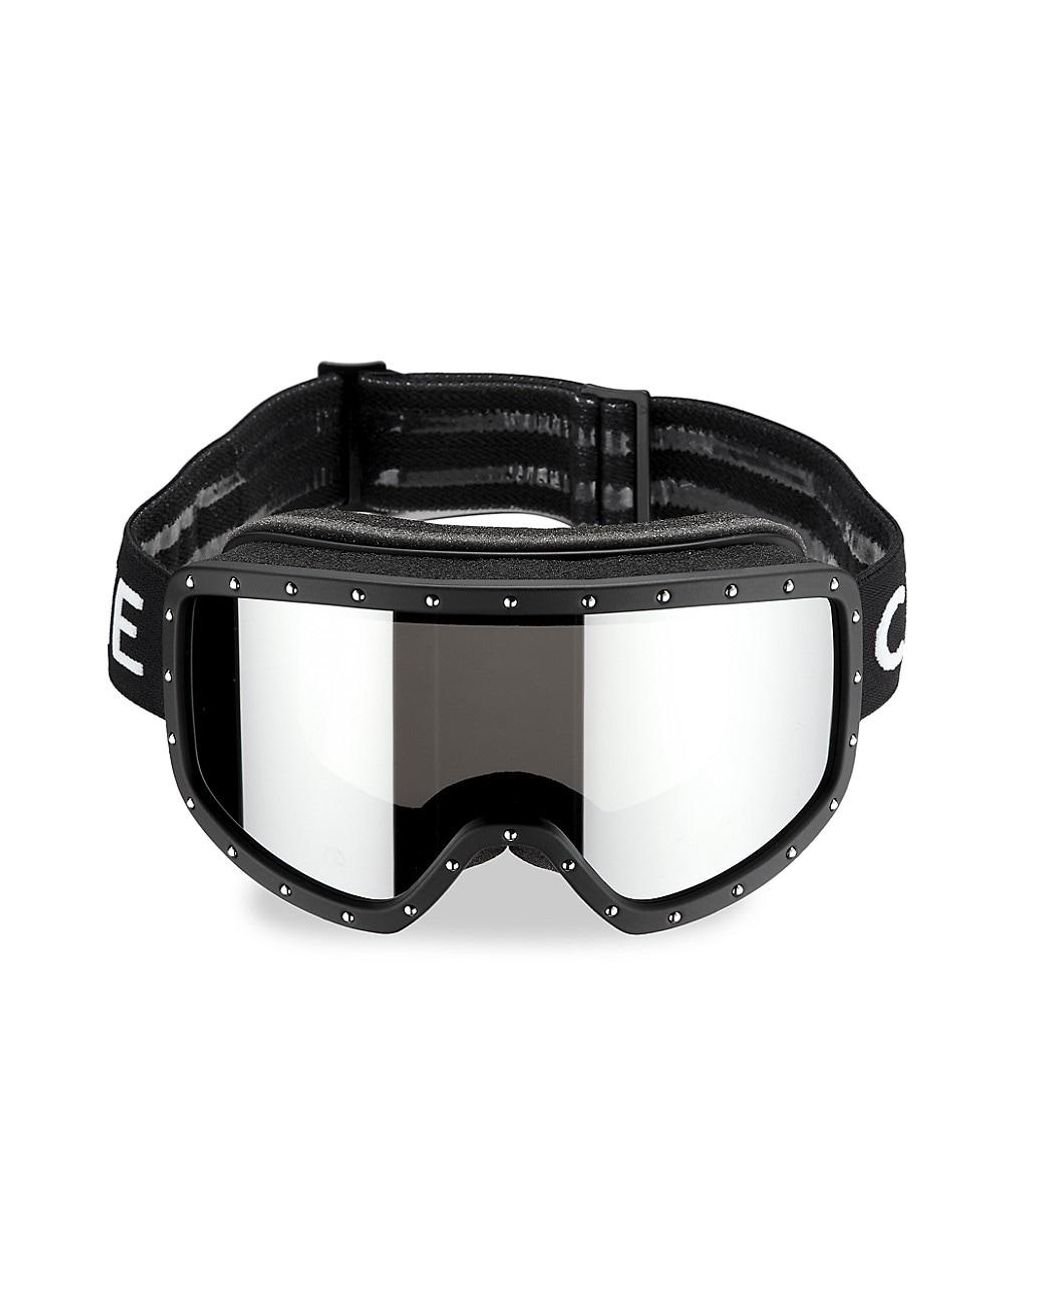 Celine Ski Mask Sunglasses, 182mm